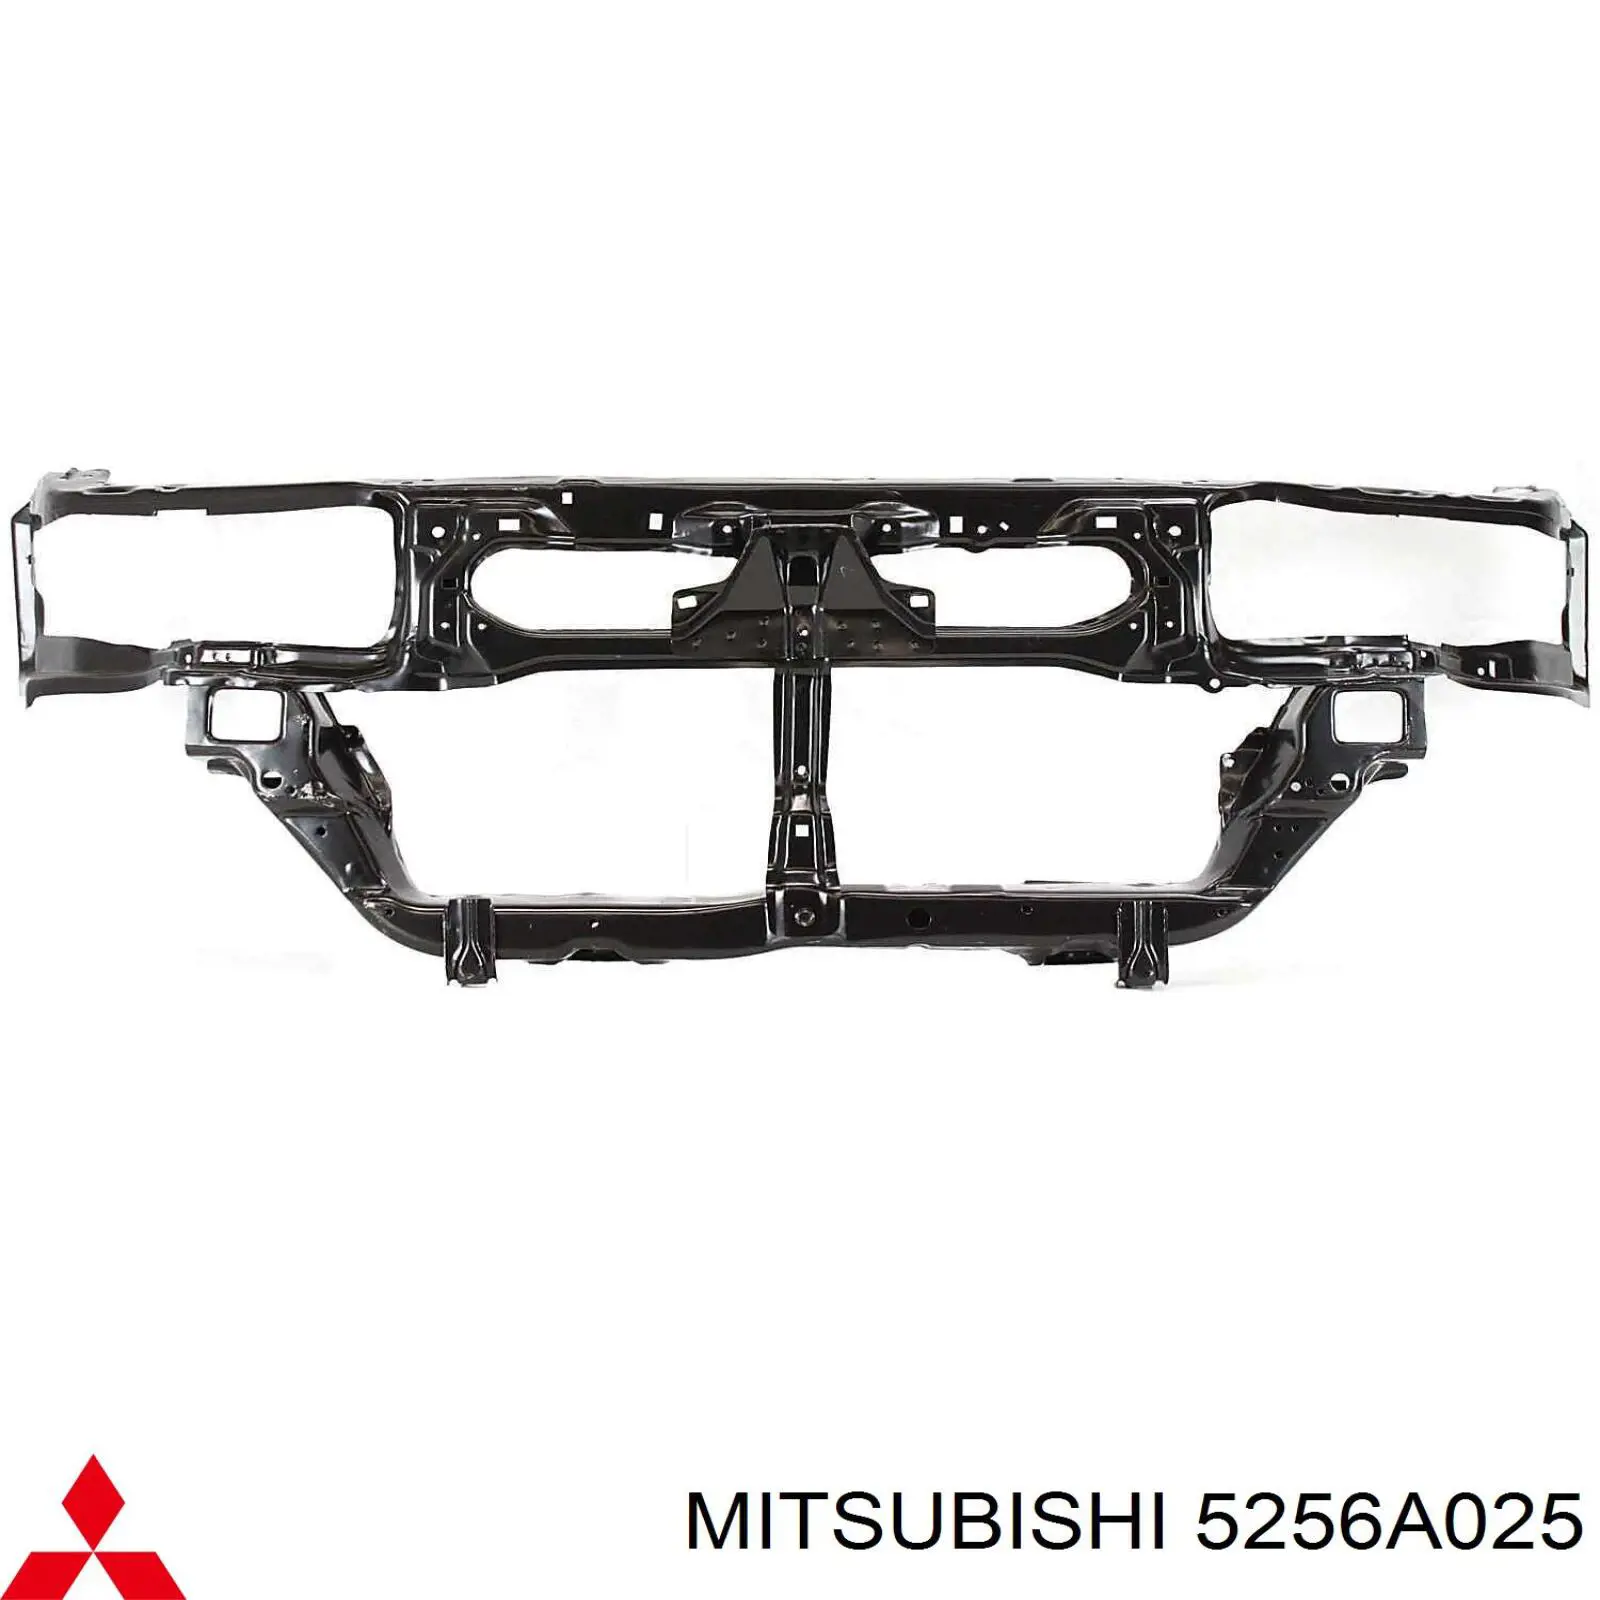 Суппорт радиатора нижний (монтажная панель крепления фар) на Mitsubishi Galant IX 